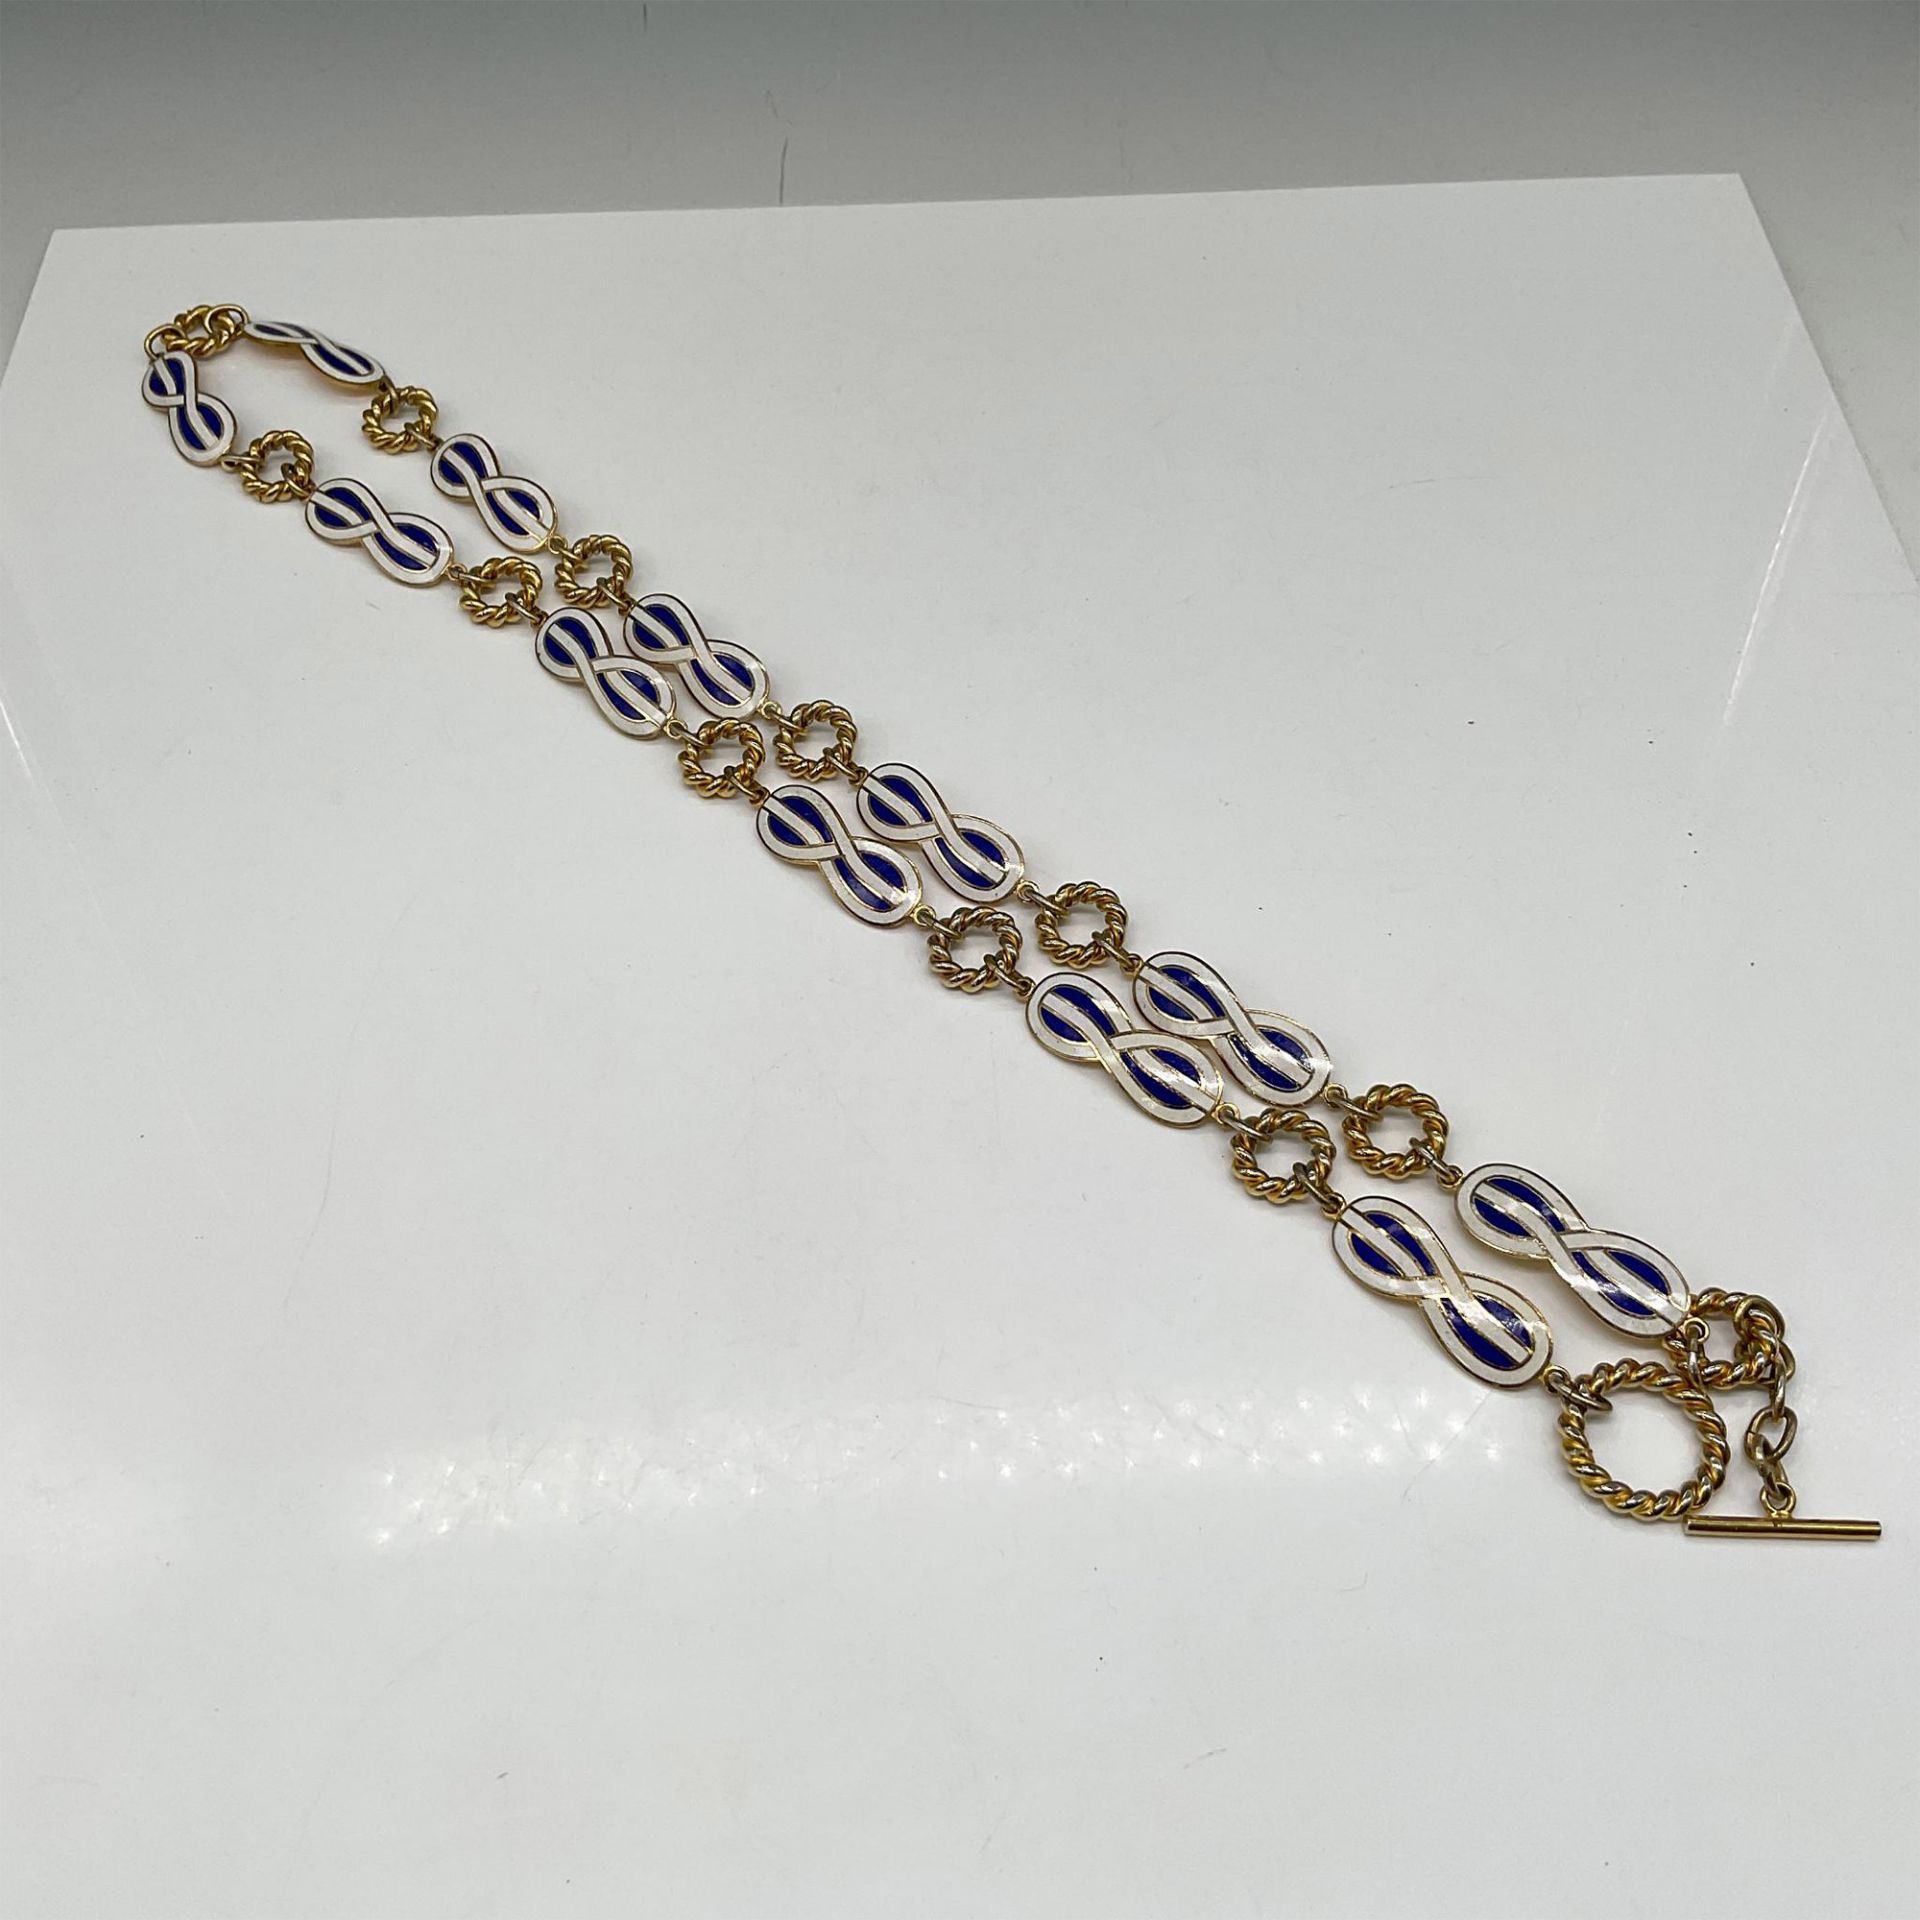 Vintage Gucci Gold Metal & Enameled Belt, Size Small - Image 2 of 3